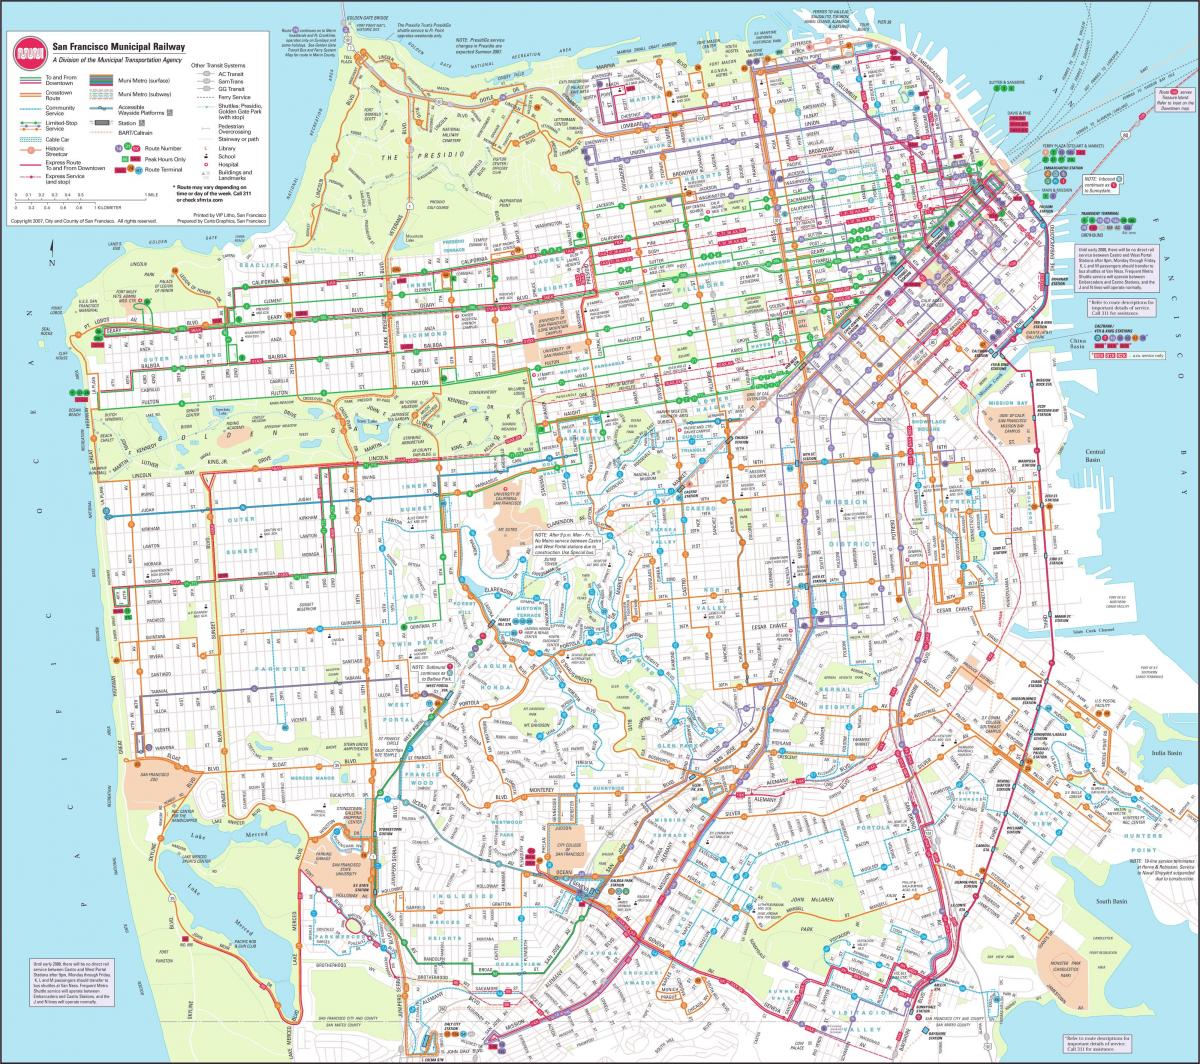 Map of San Francisco municipal railway